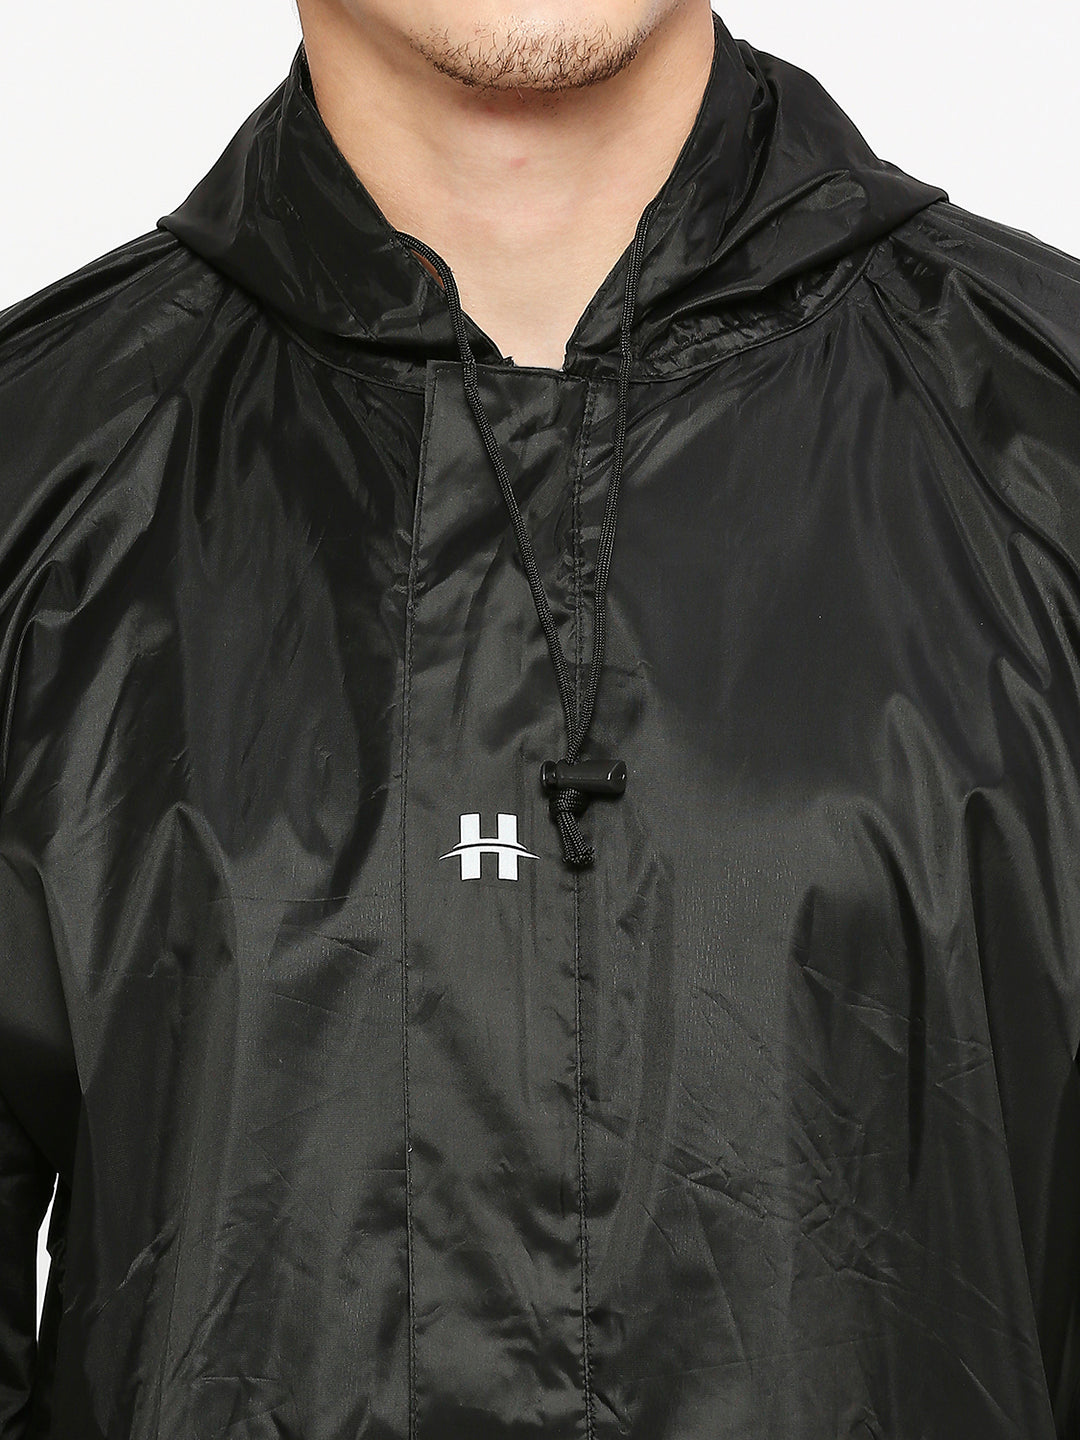 Highlands Rider Waterproof Rain Suit